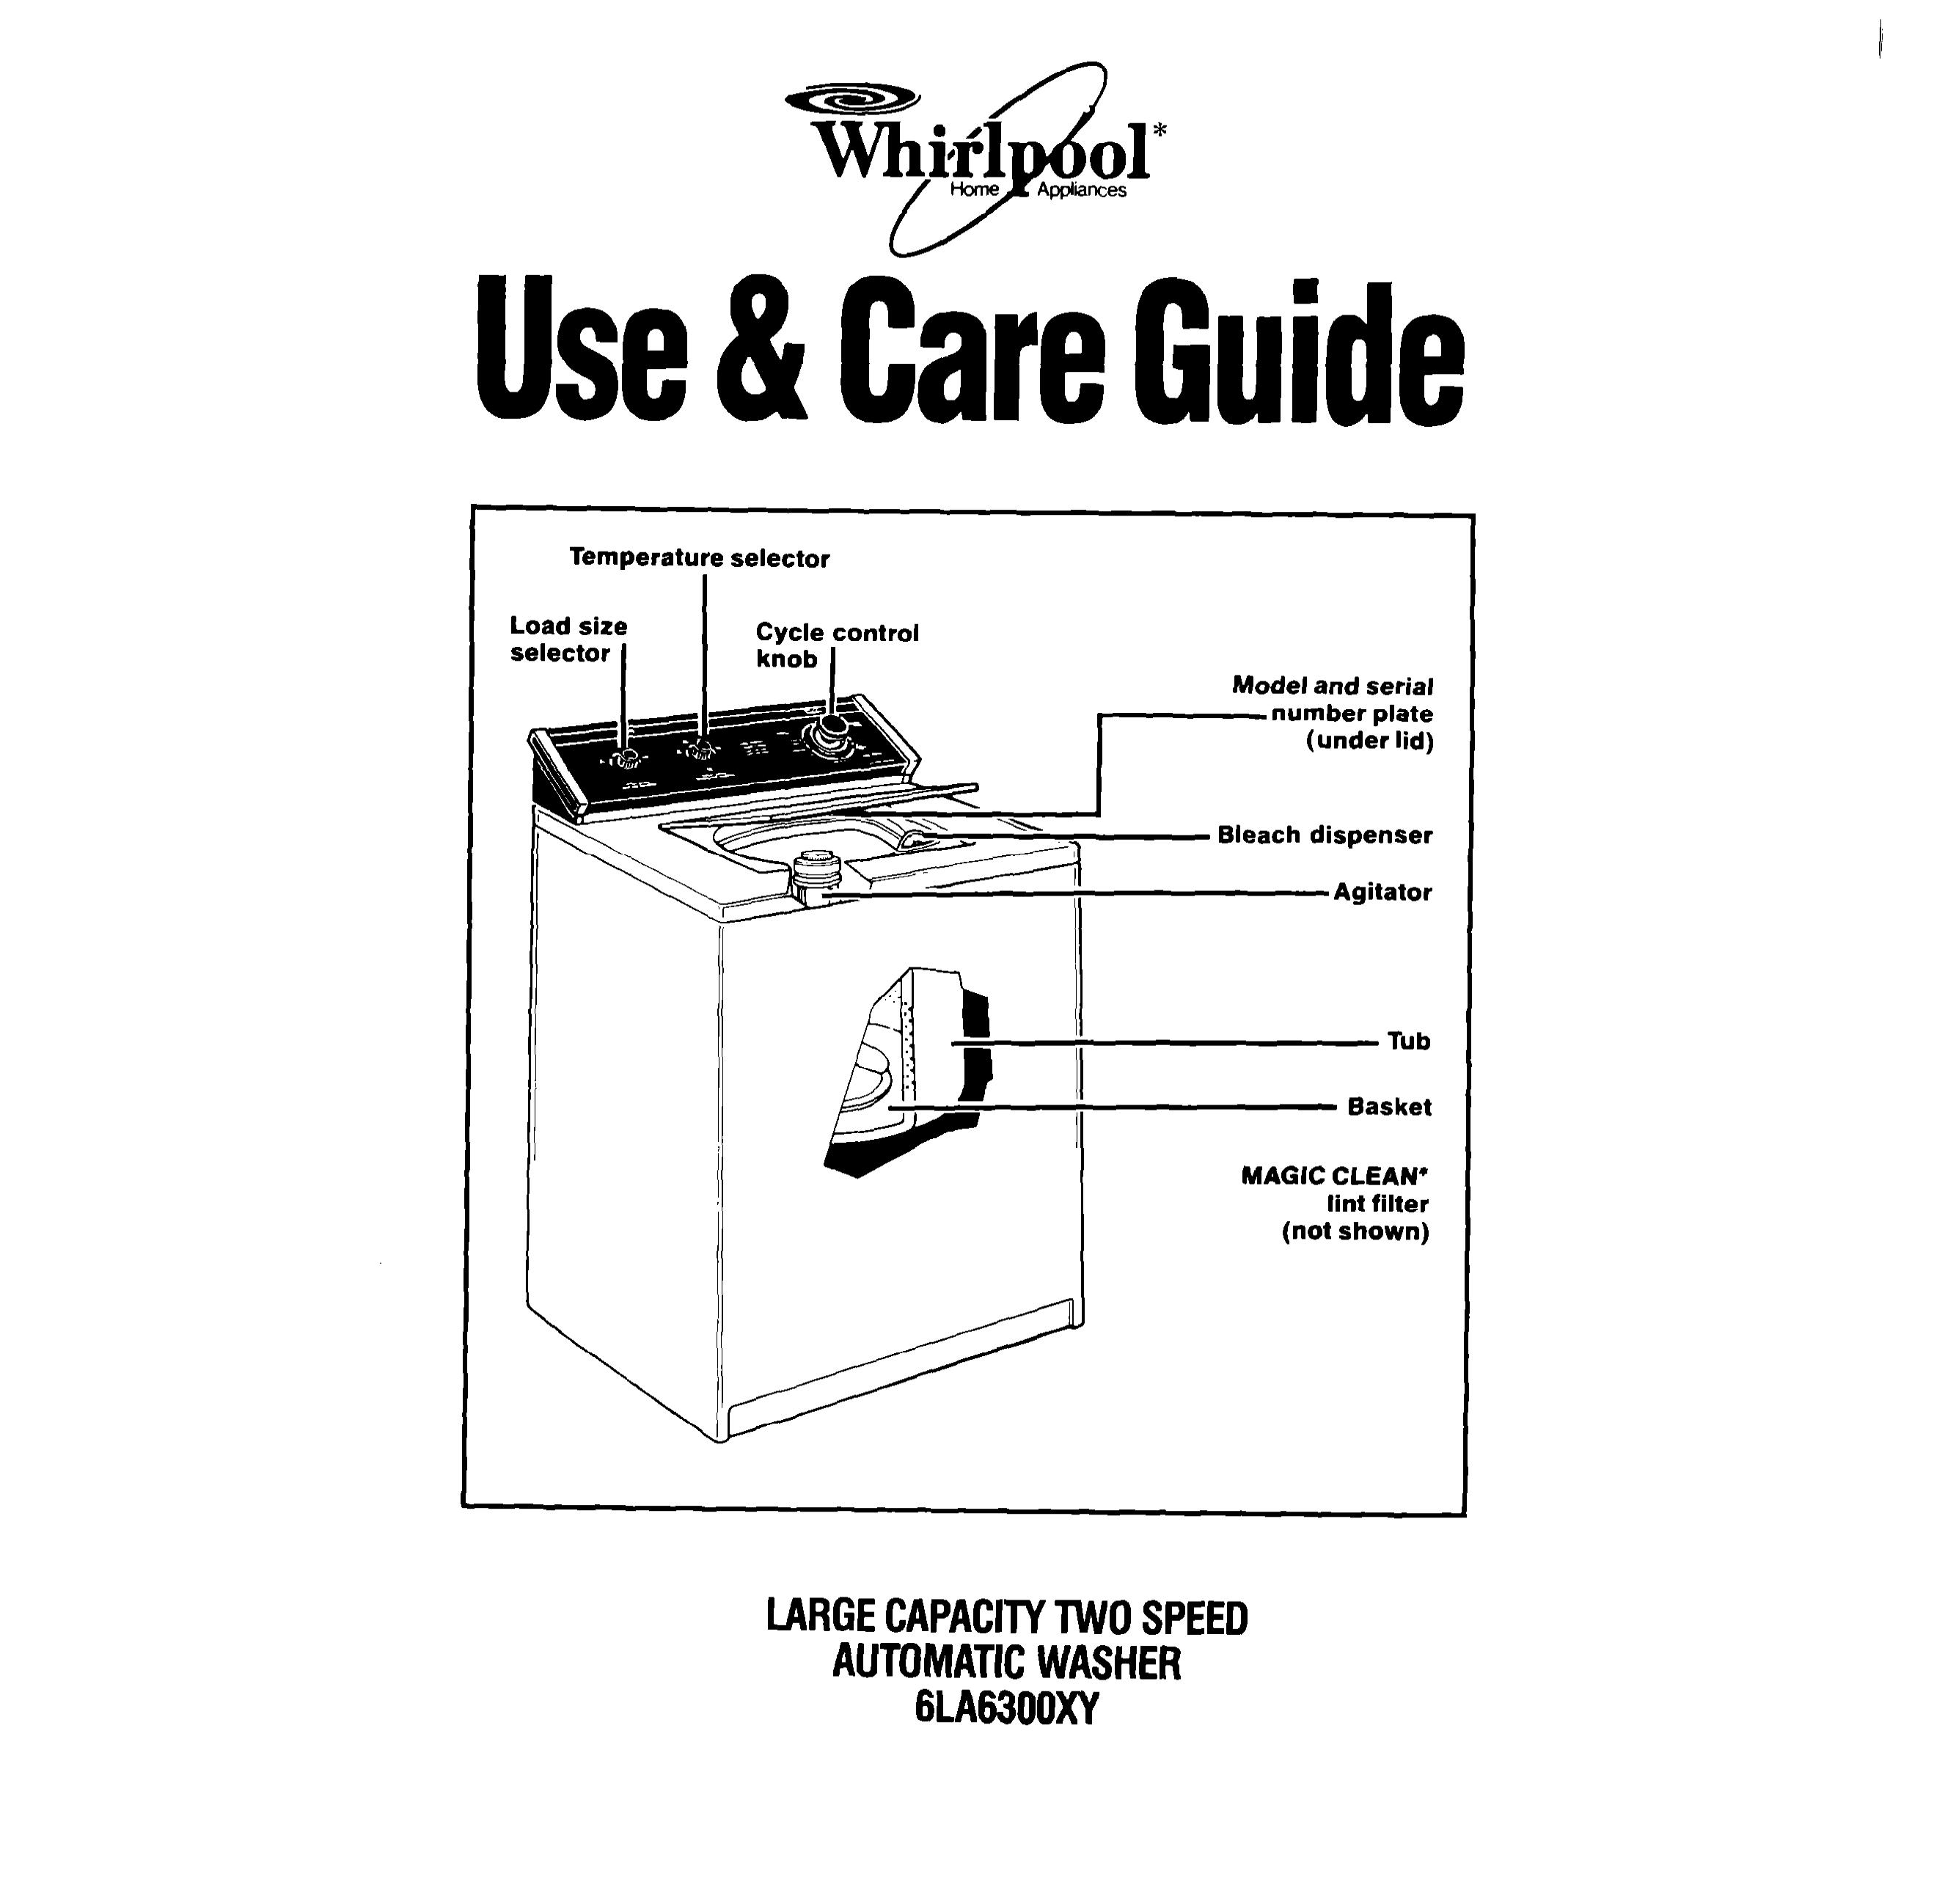 Whirlpool 6LA6300xY Washer/Dryer User Manual